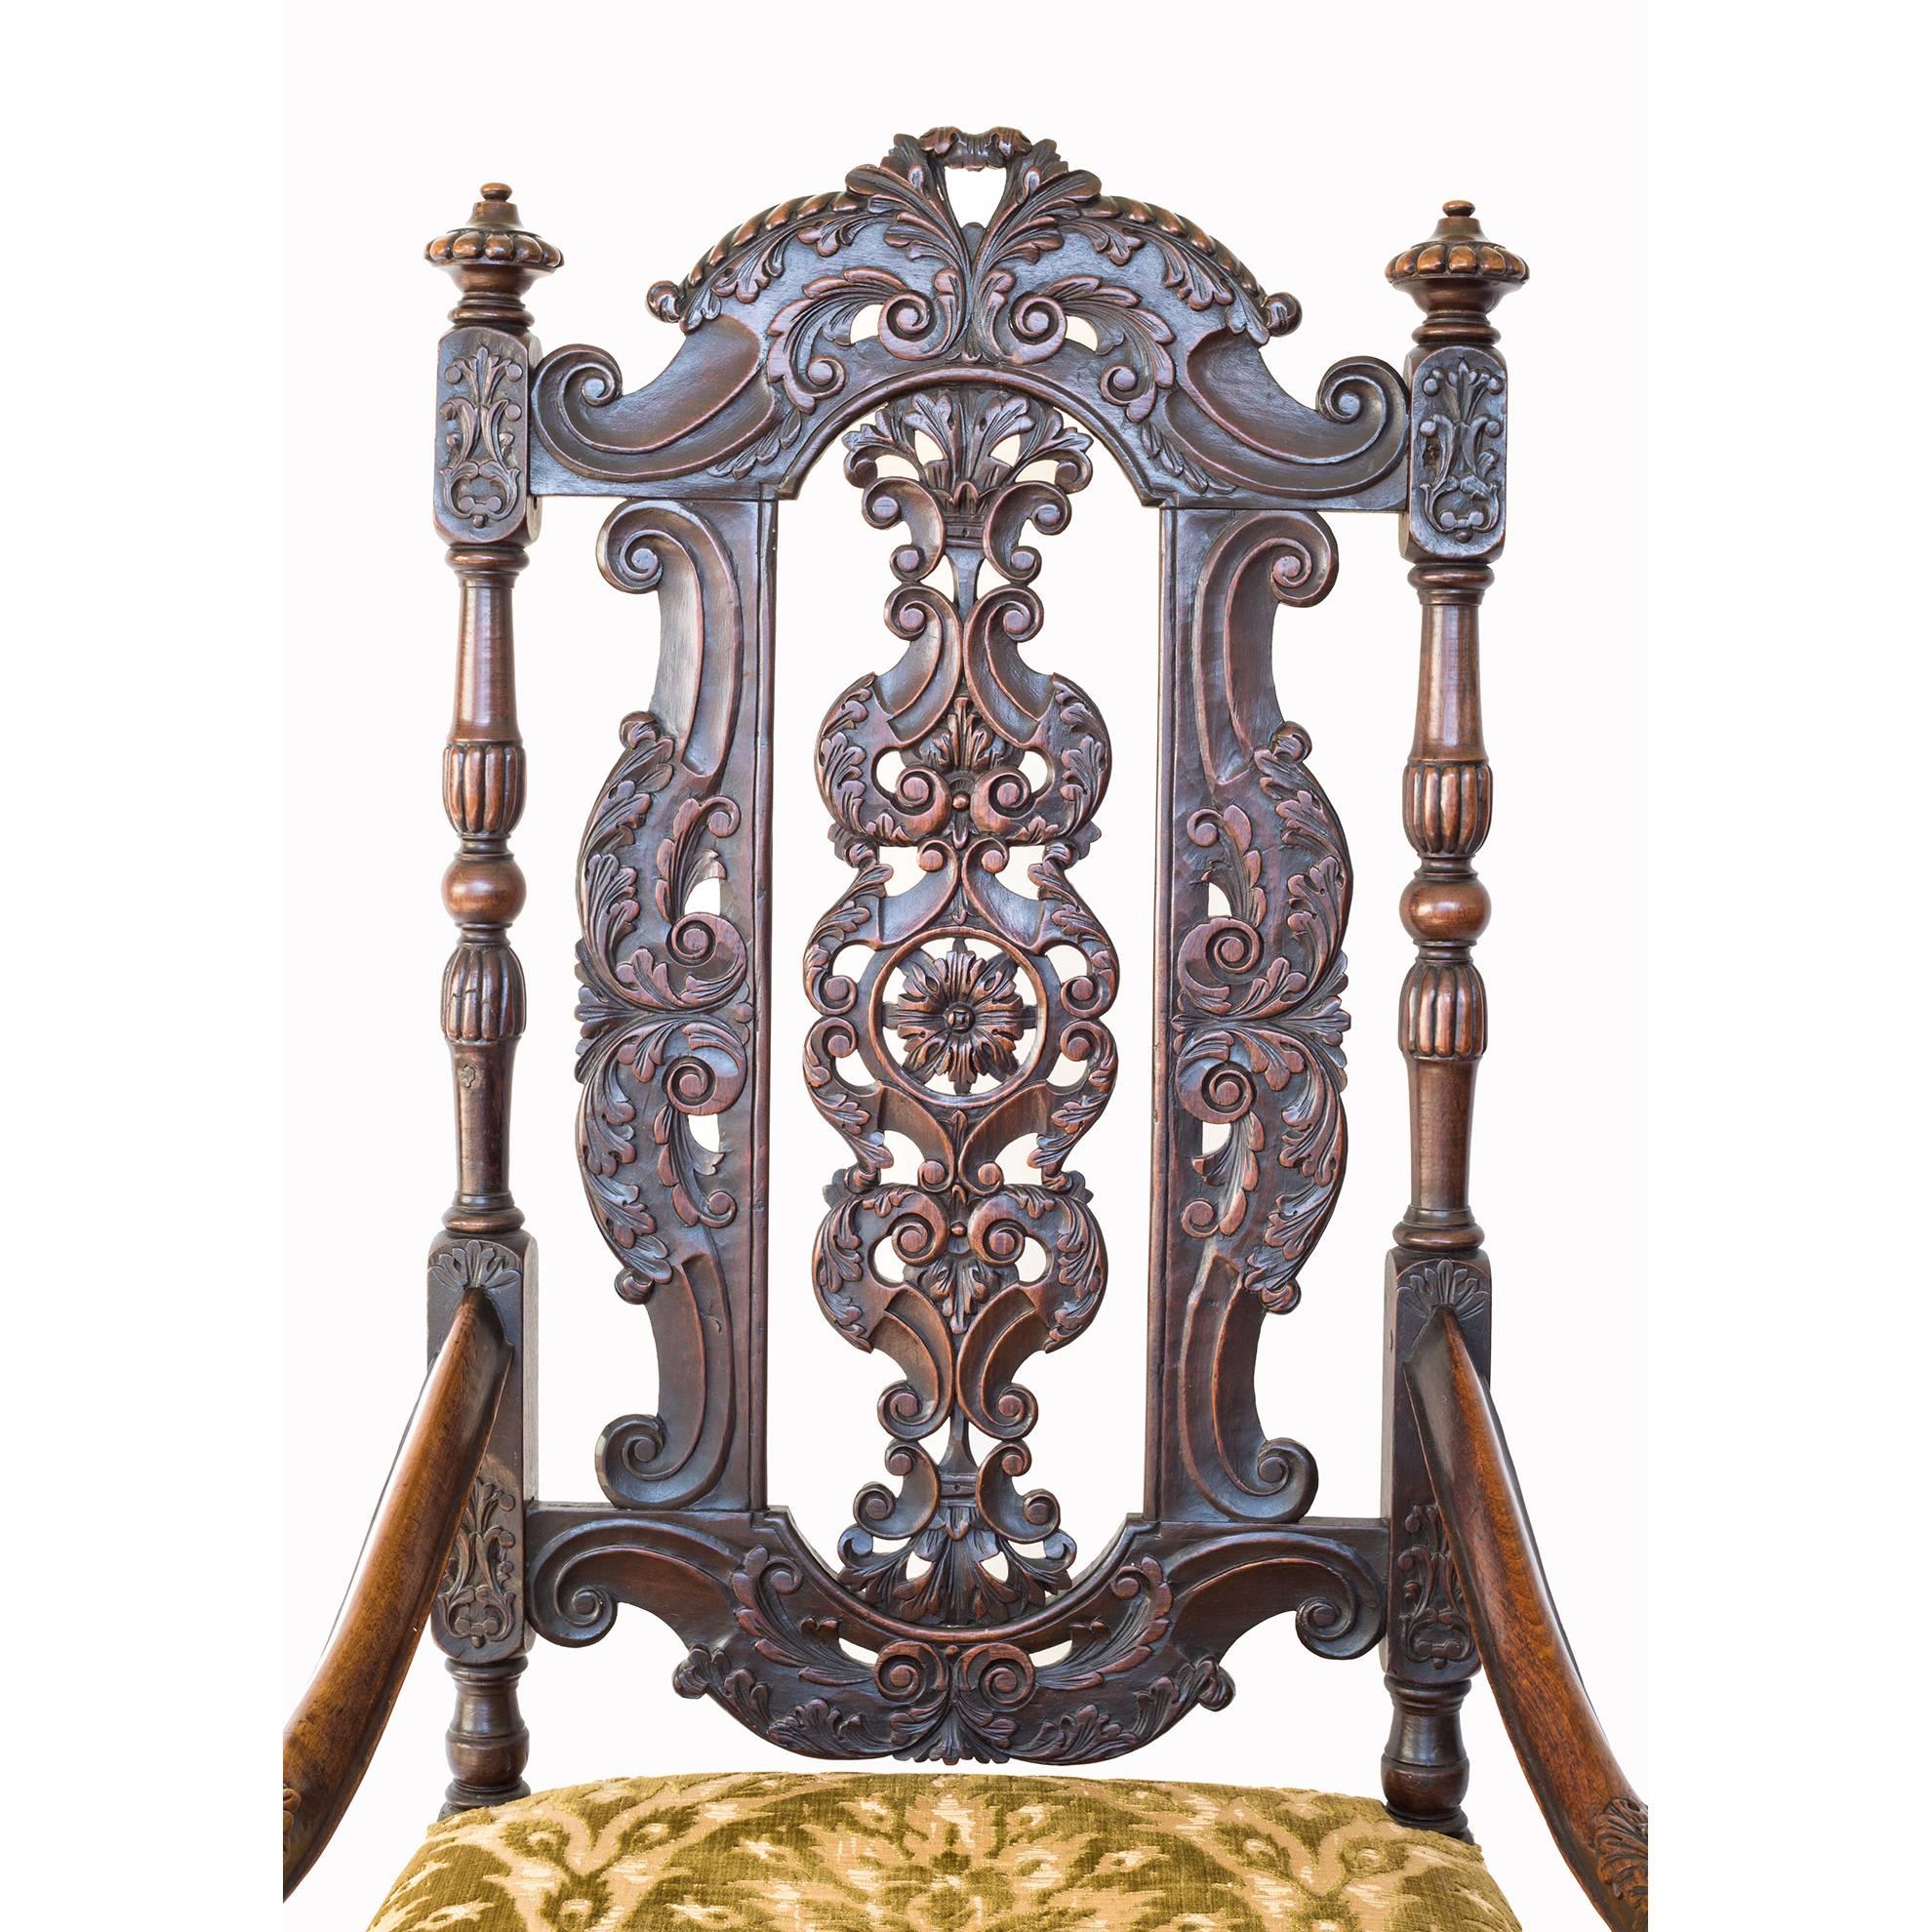 English Flemish 17th Century Style Carved Walnut Throne Armchair, c. 1890